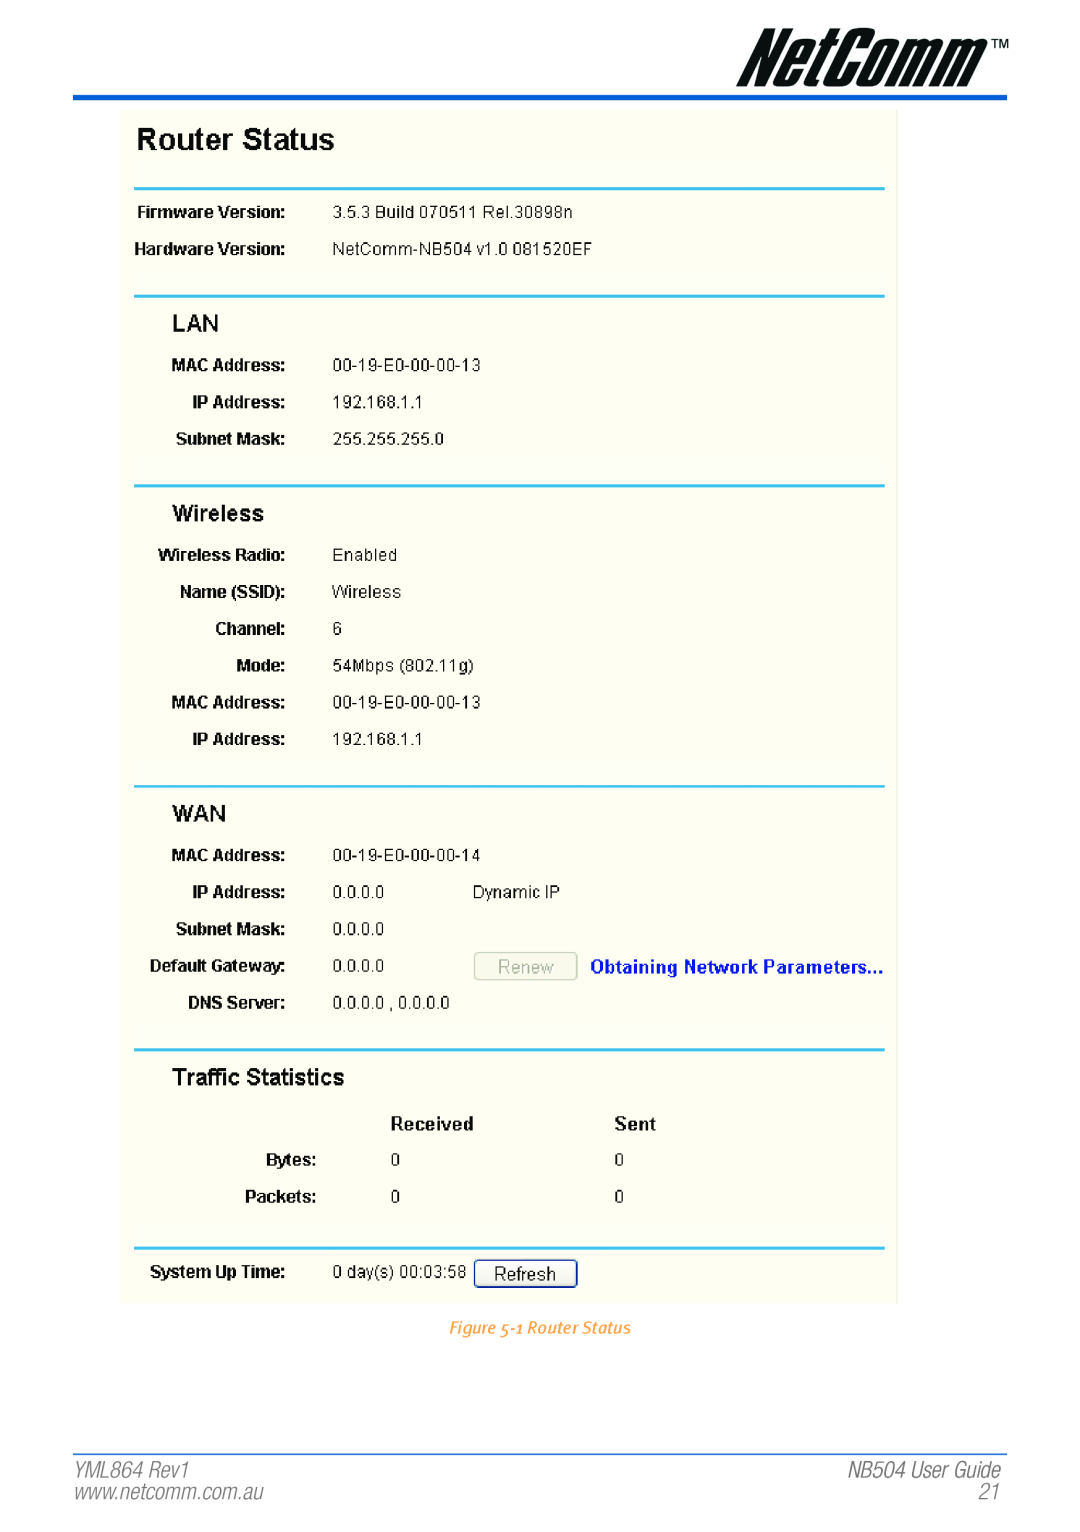 NetComm manual YML864 Rev1, 1 Router Status, NB504 User Guide 